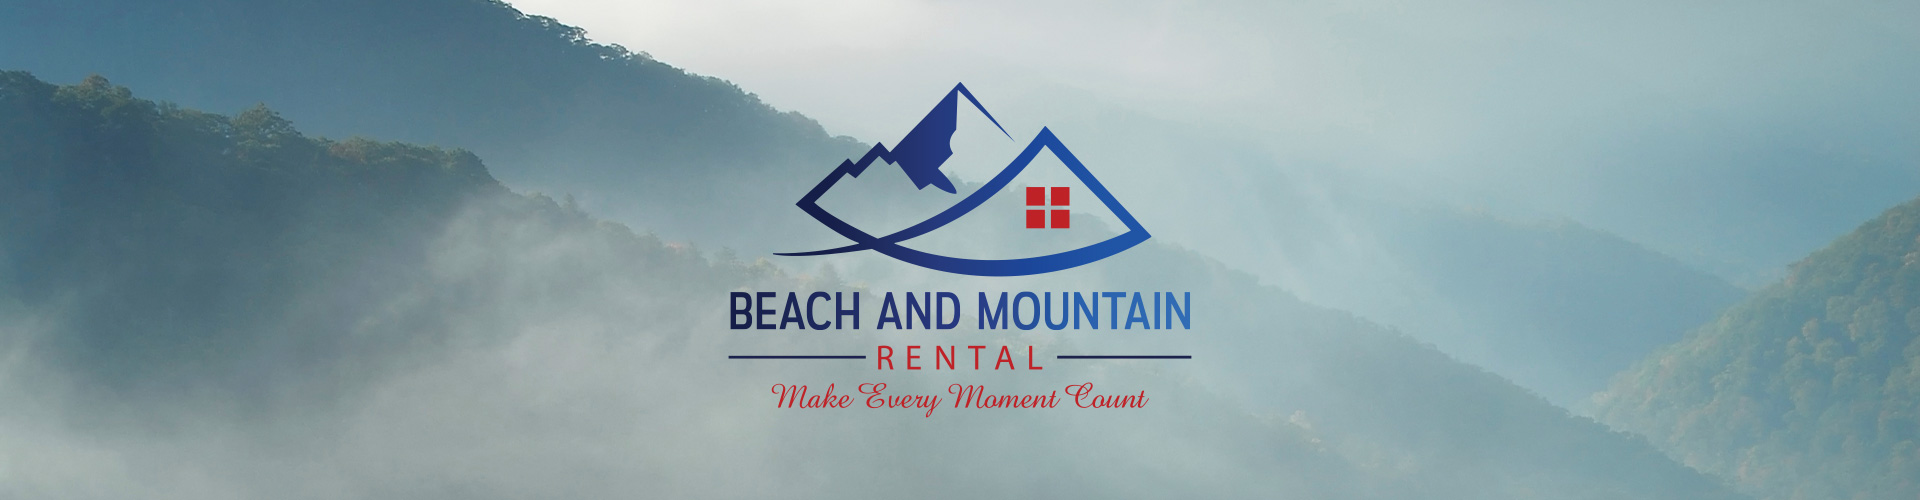 Beach and Mountain Rental Banner